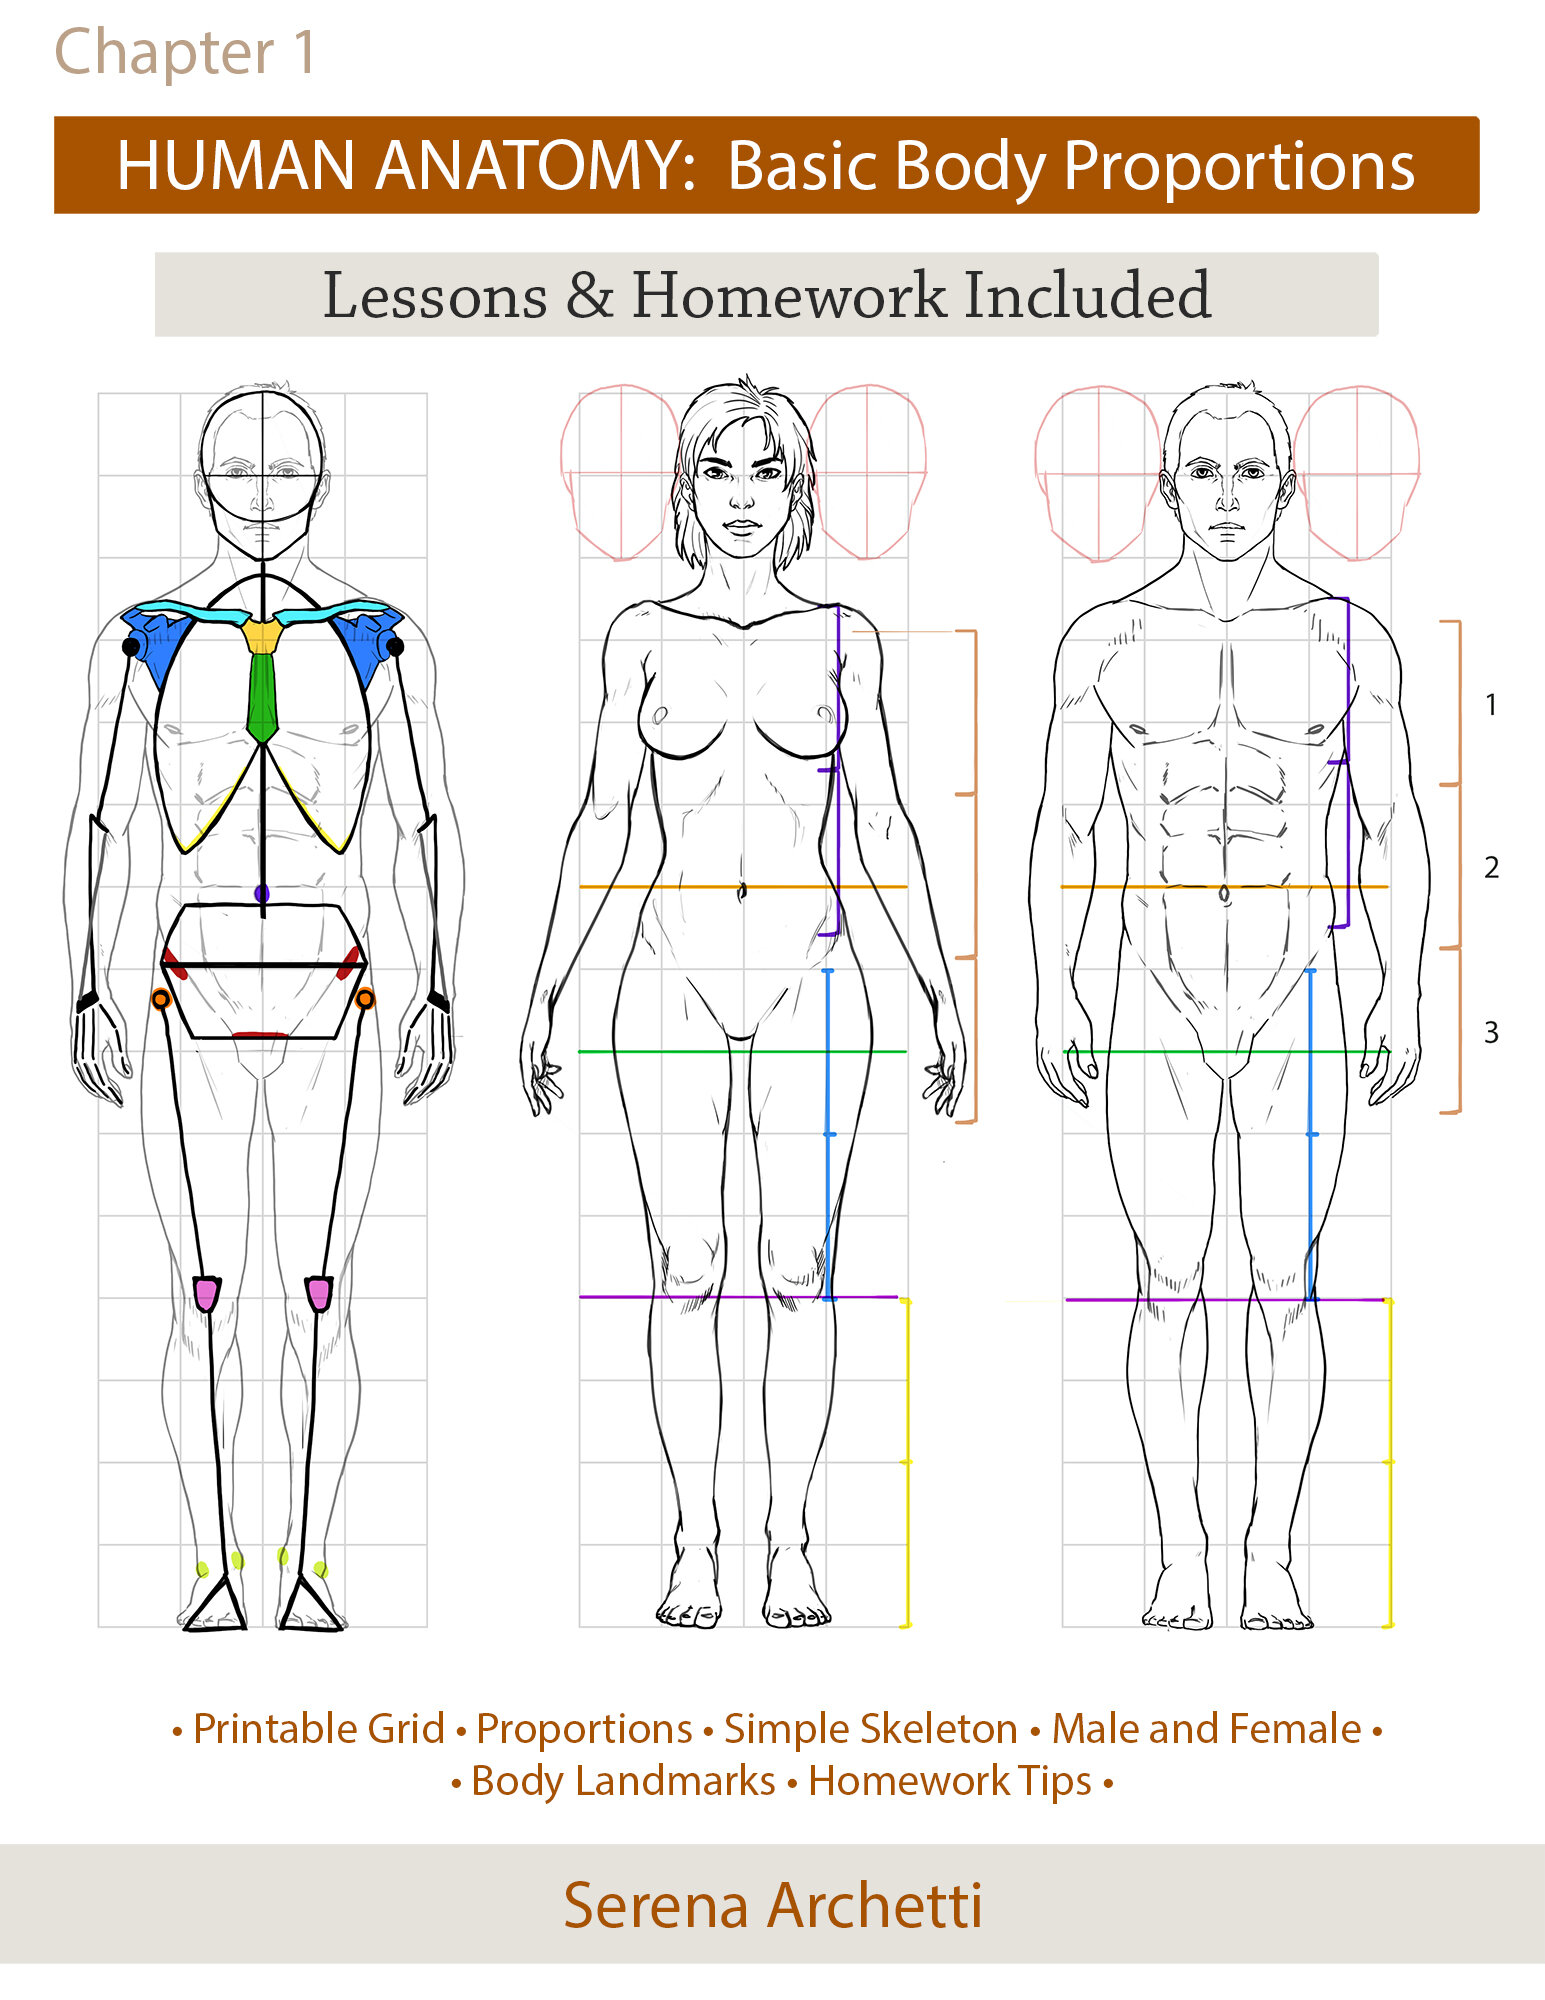 Human Anatomy: Body Proportions Tutorial — Serena Archetti